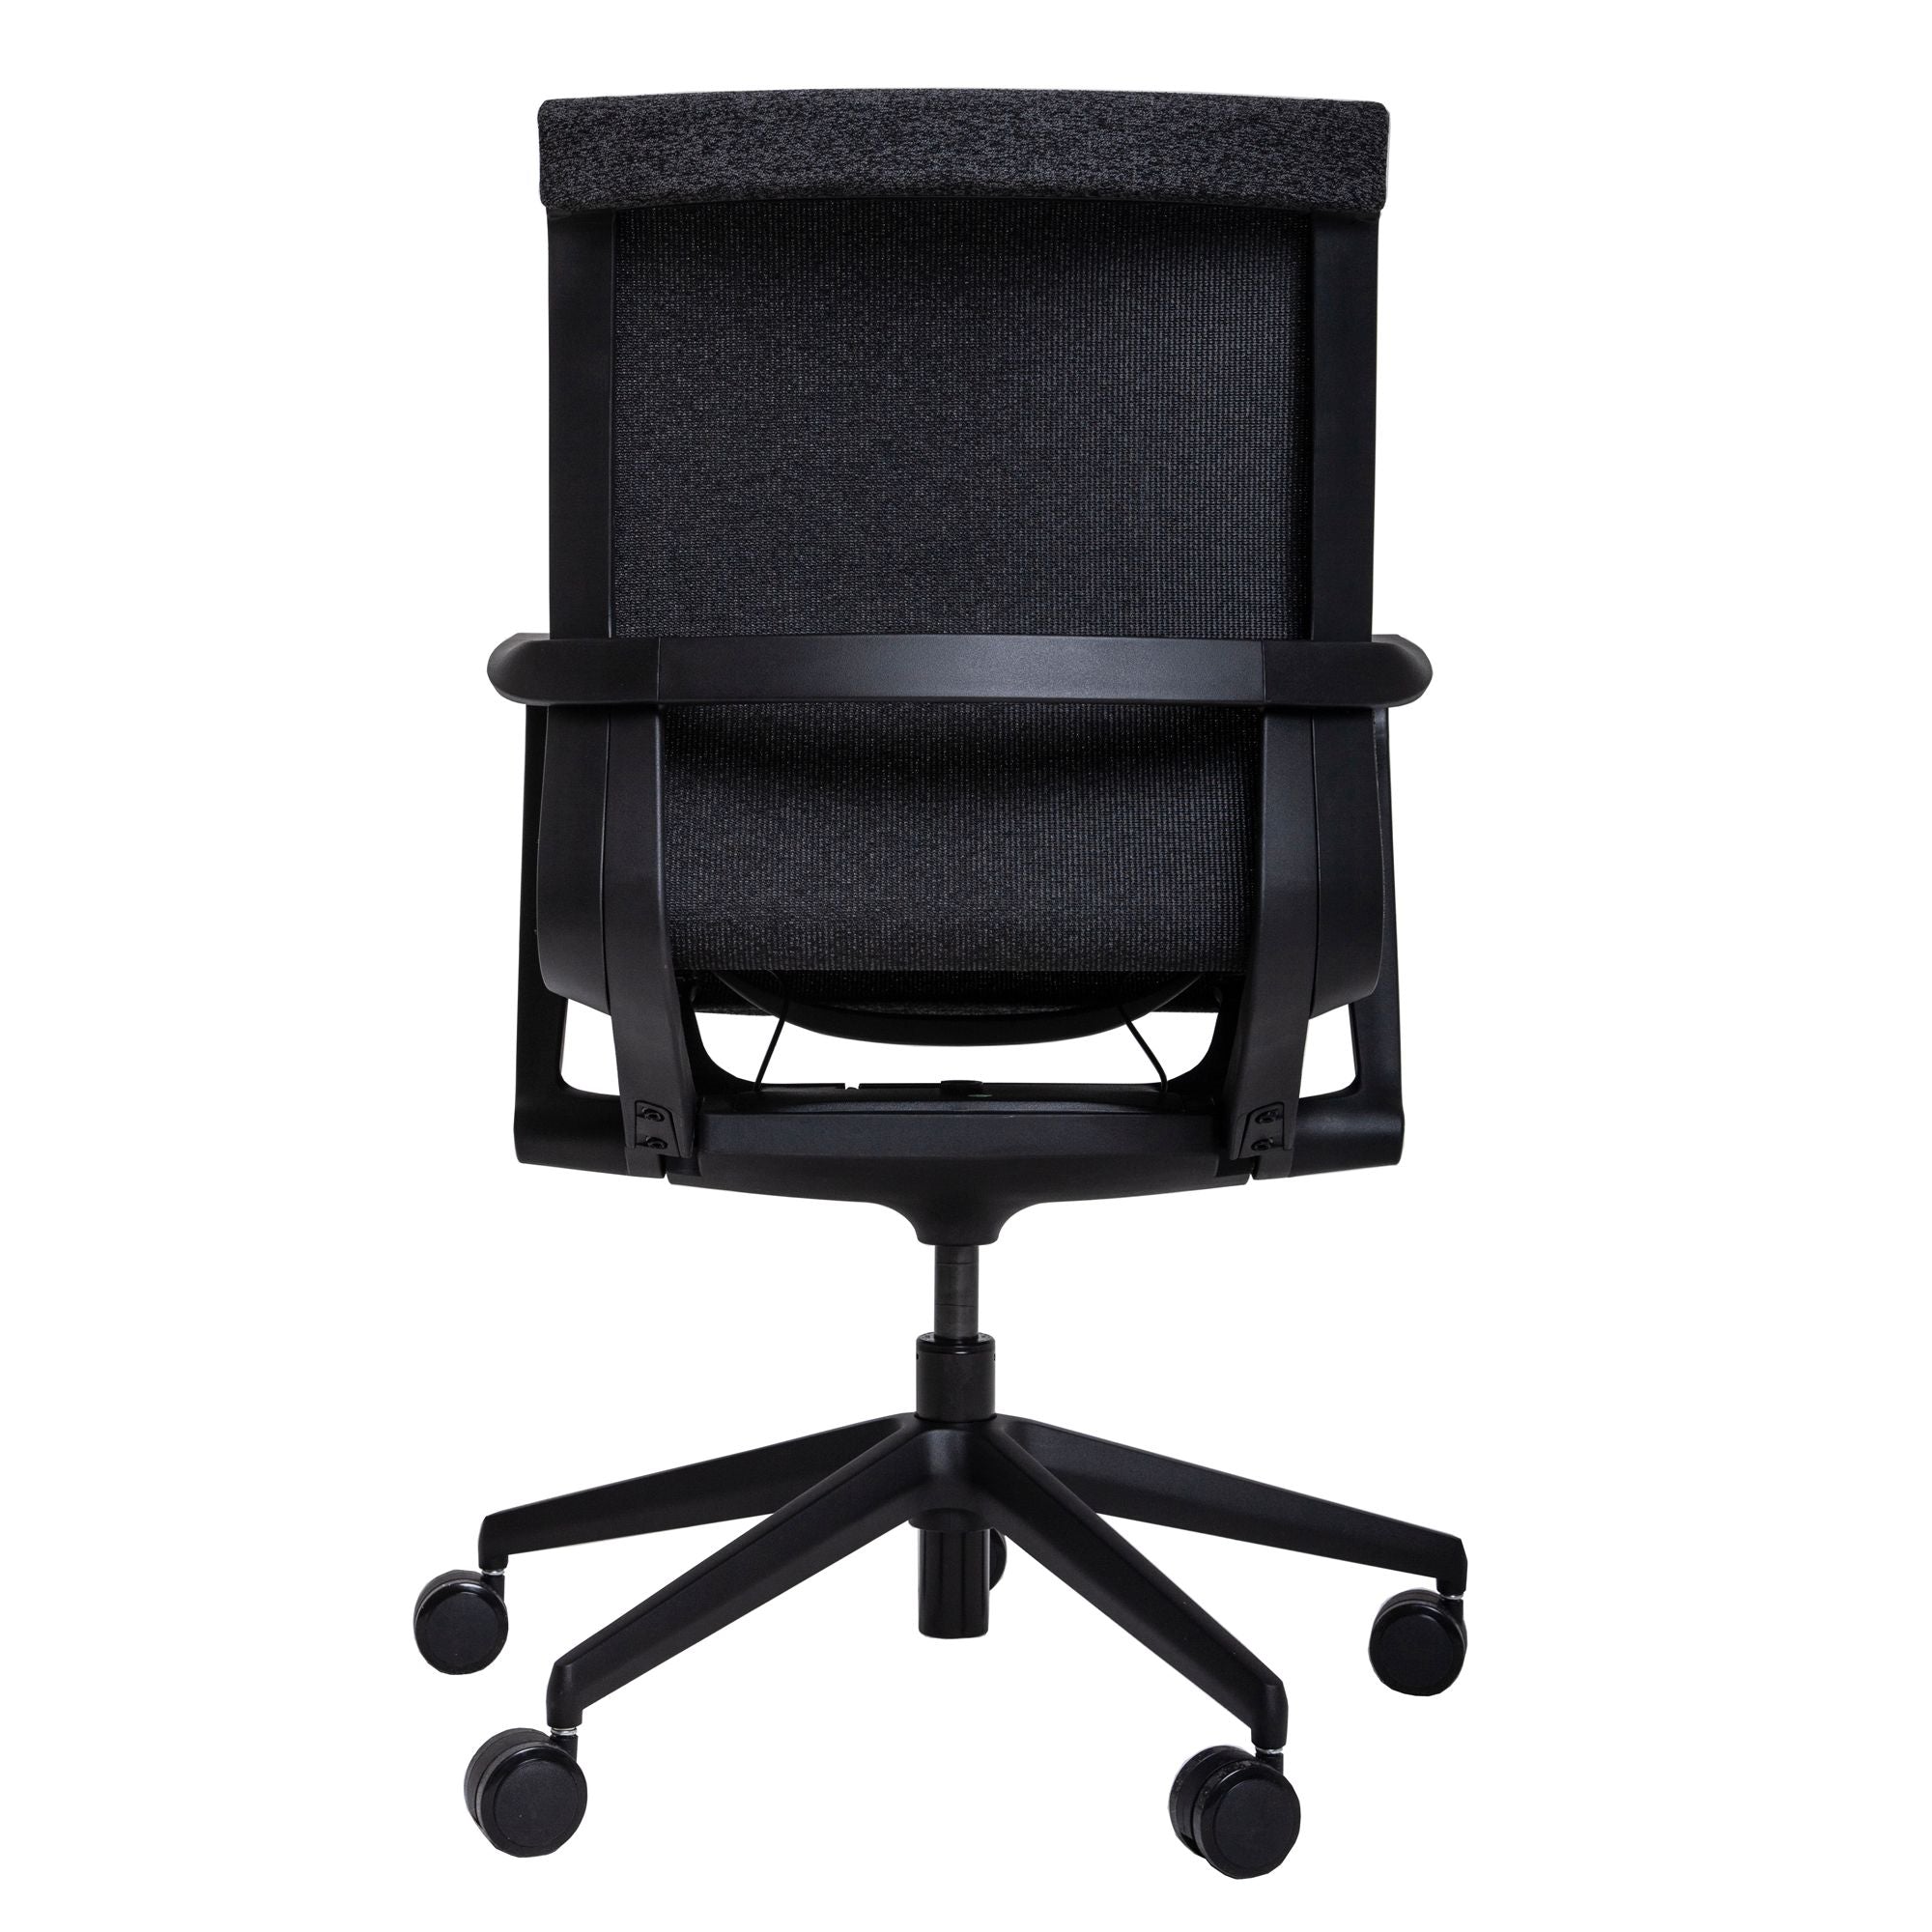 Zephyr Fitout Chair